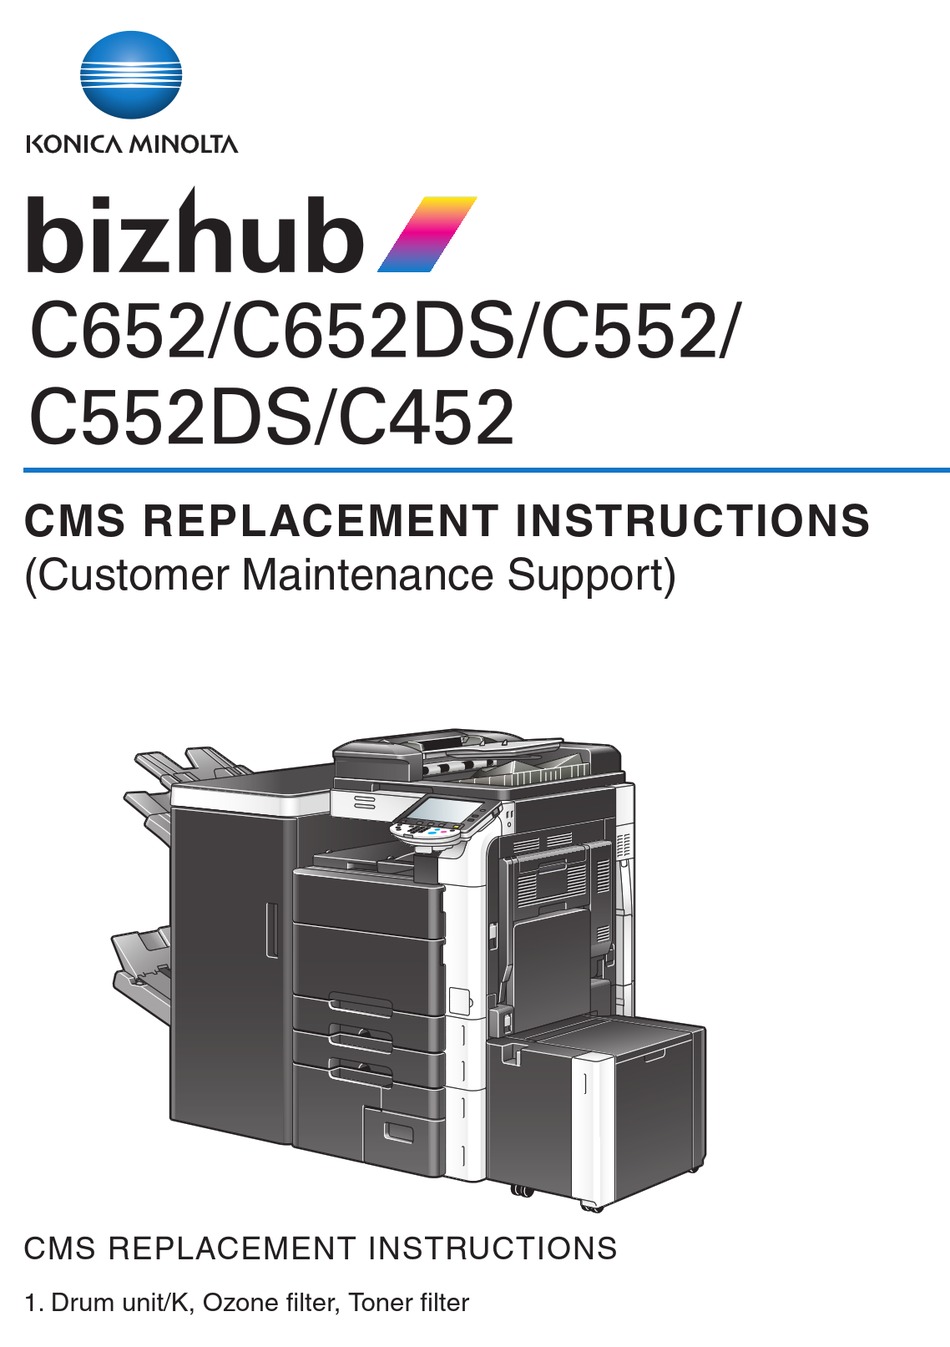 Konica Minolta Bizhub C452 Replacement Instructions Manual Pdf Download Manualslib